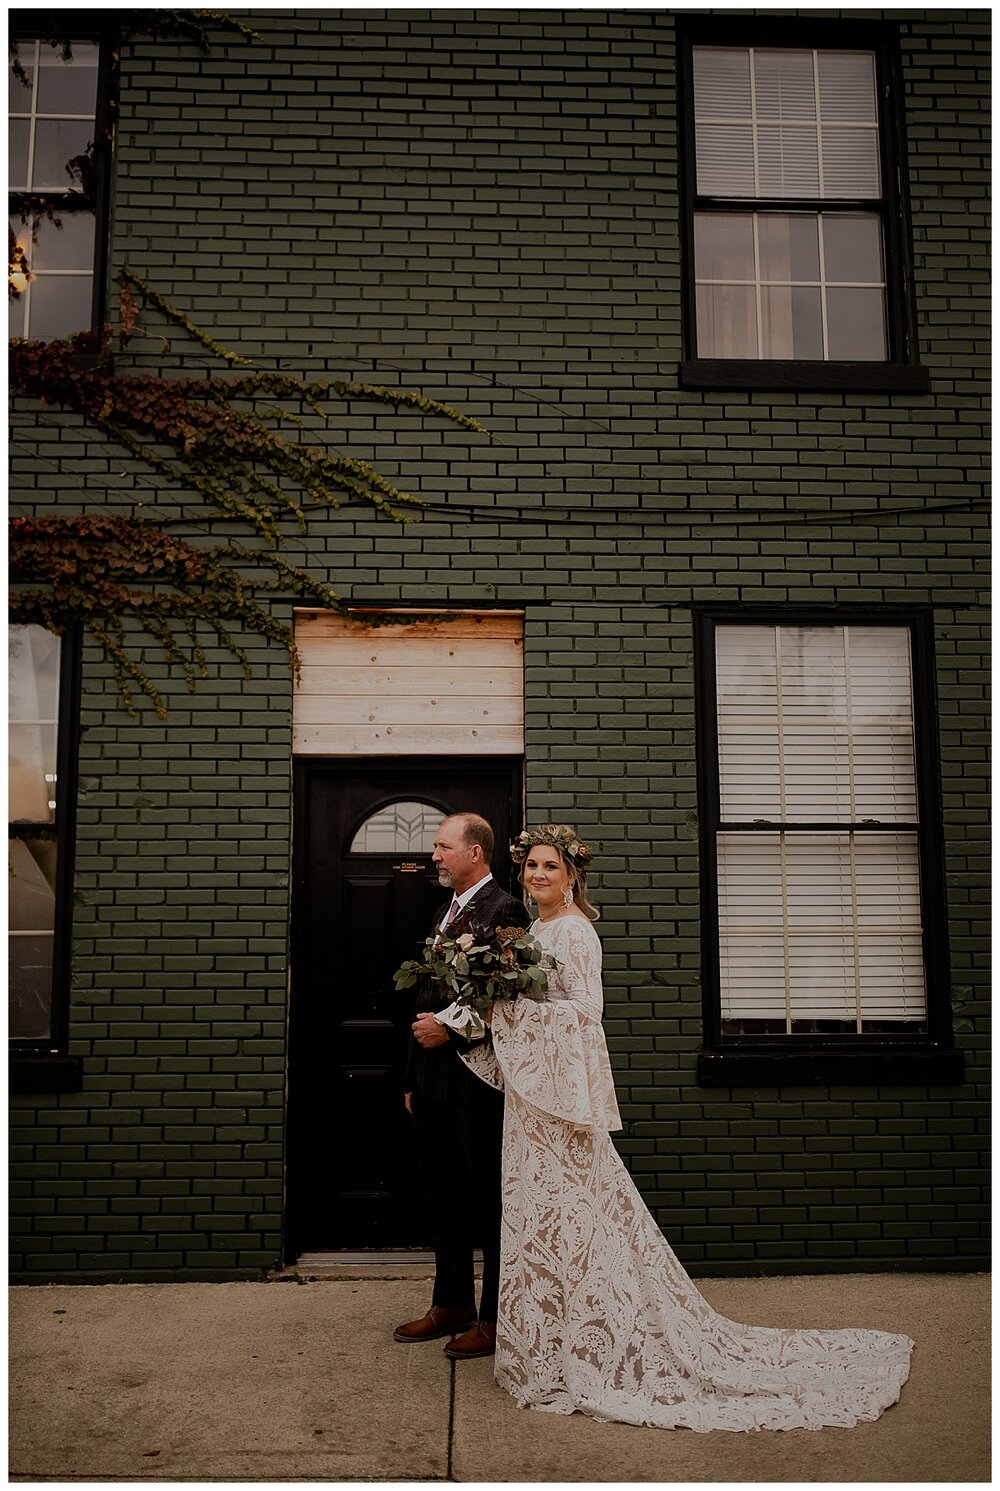 THE IVY HOUSE WEDDING,  MILWAUKEE WEDDING PHOTOGRAPHER, LICHTER PHOTOGRAPHY 35.jpg